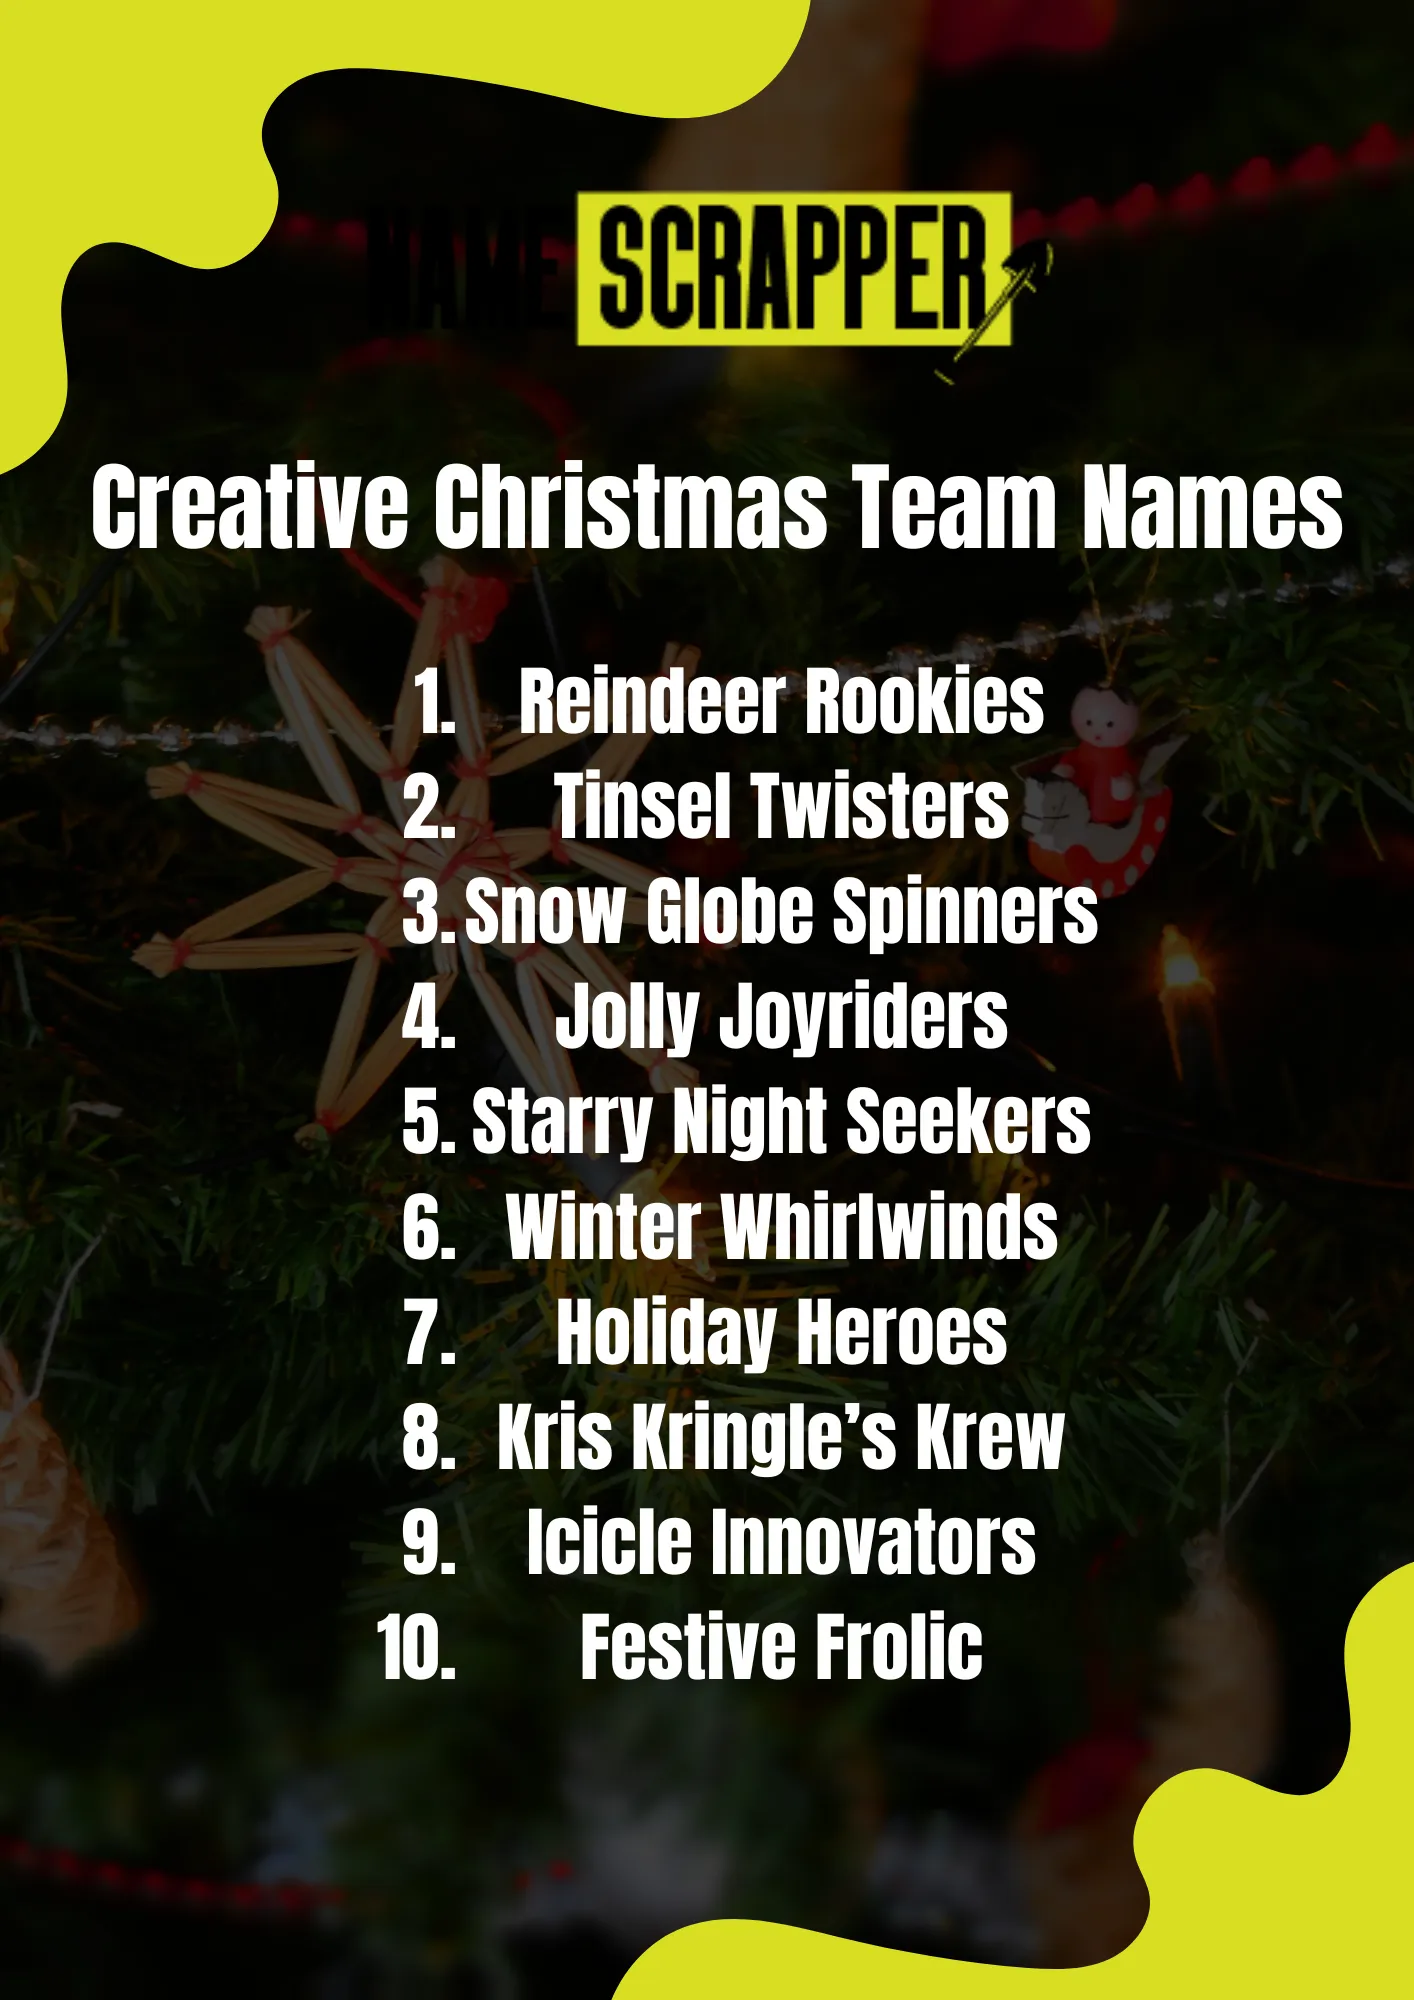 Creative Christmas Team Names